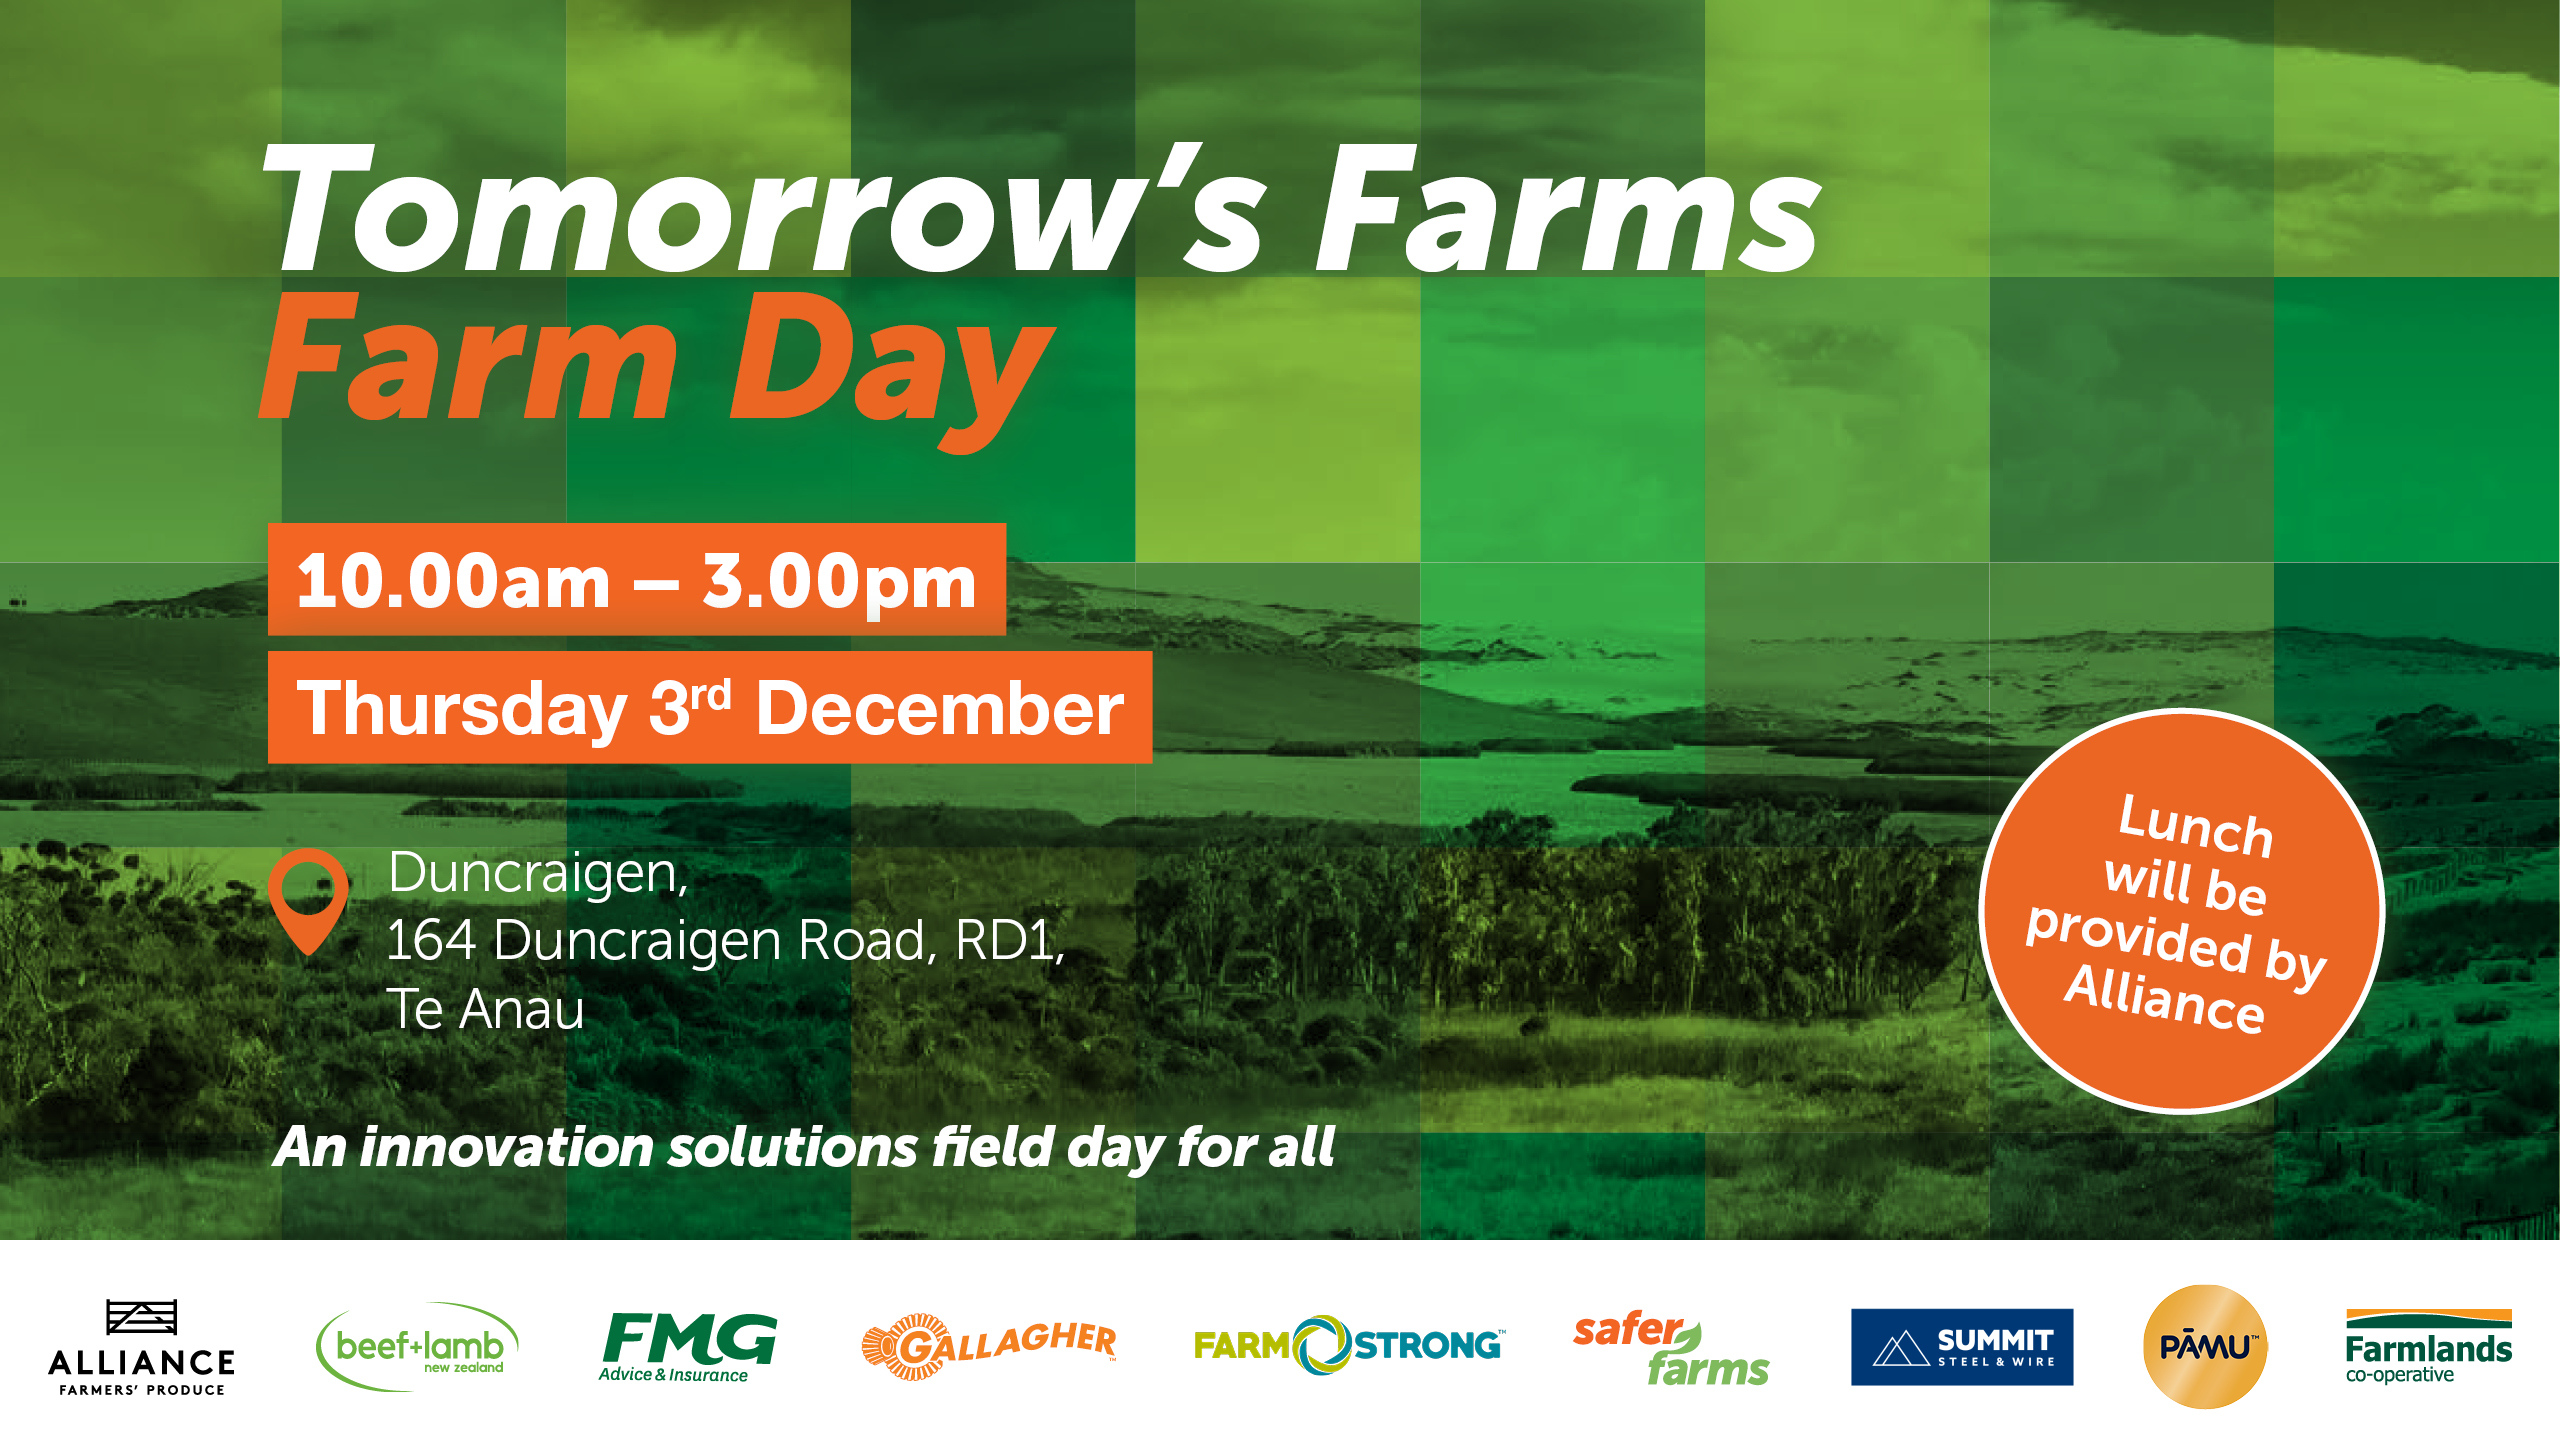 Open Day invites locals to Pamu's Duncraigen Farm in Te Anau